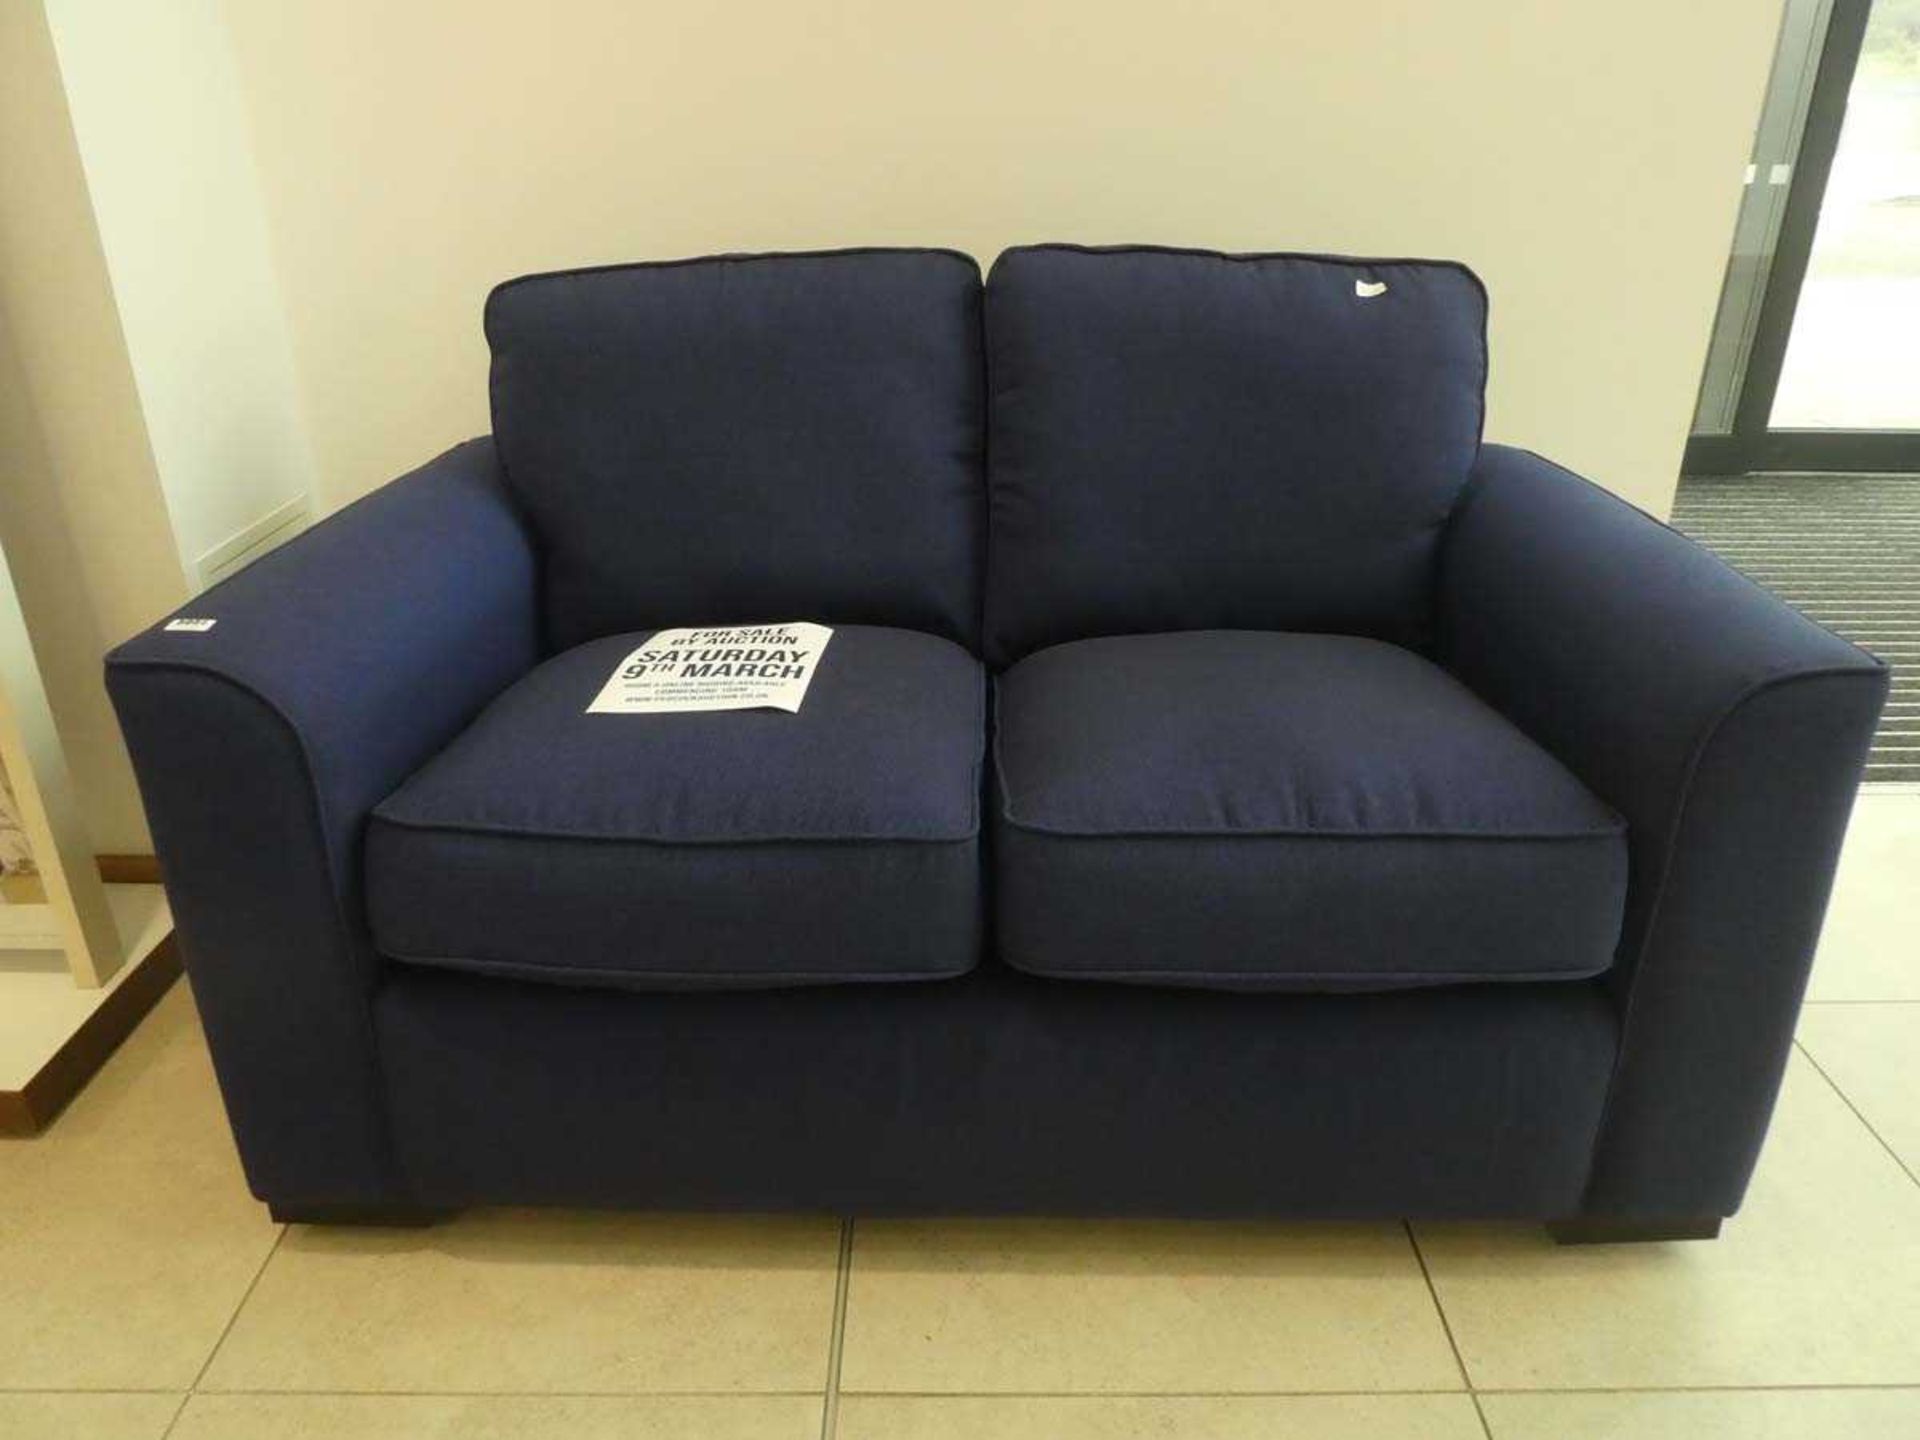 (13) Boardwalk small navy blue fabric 2-seater sofa